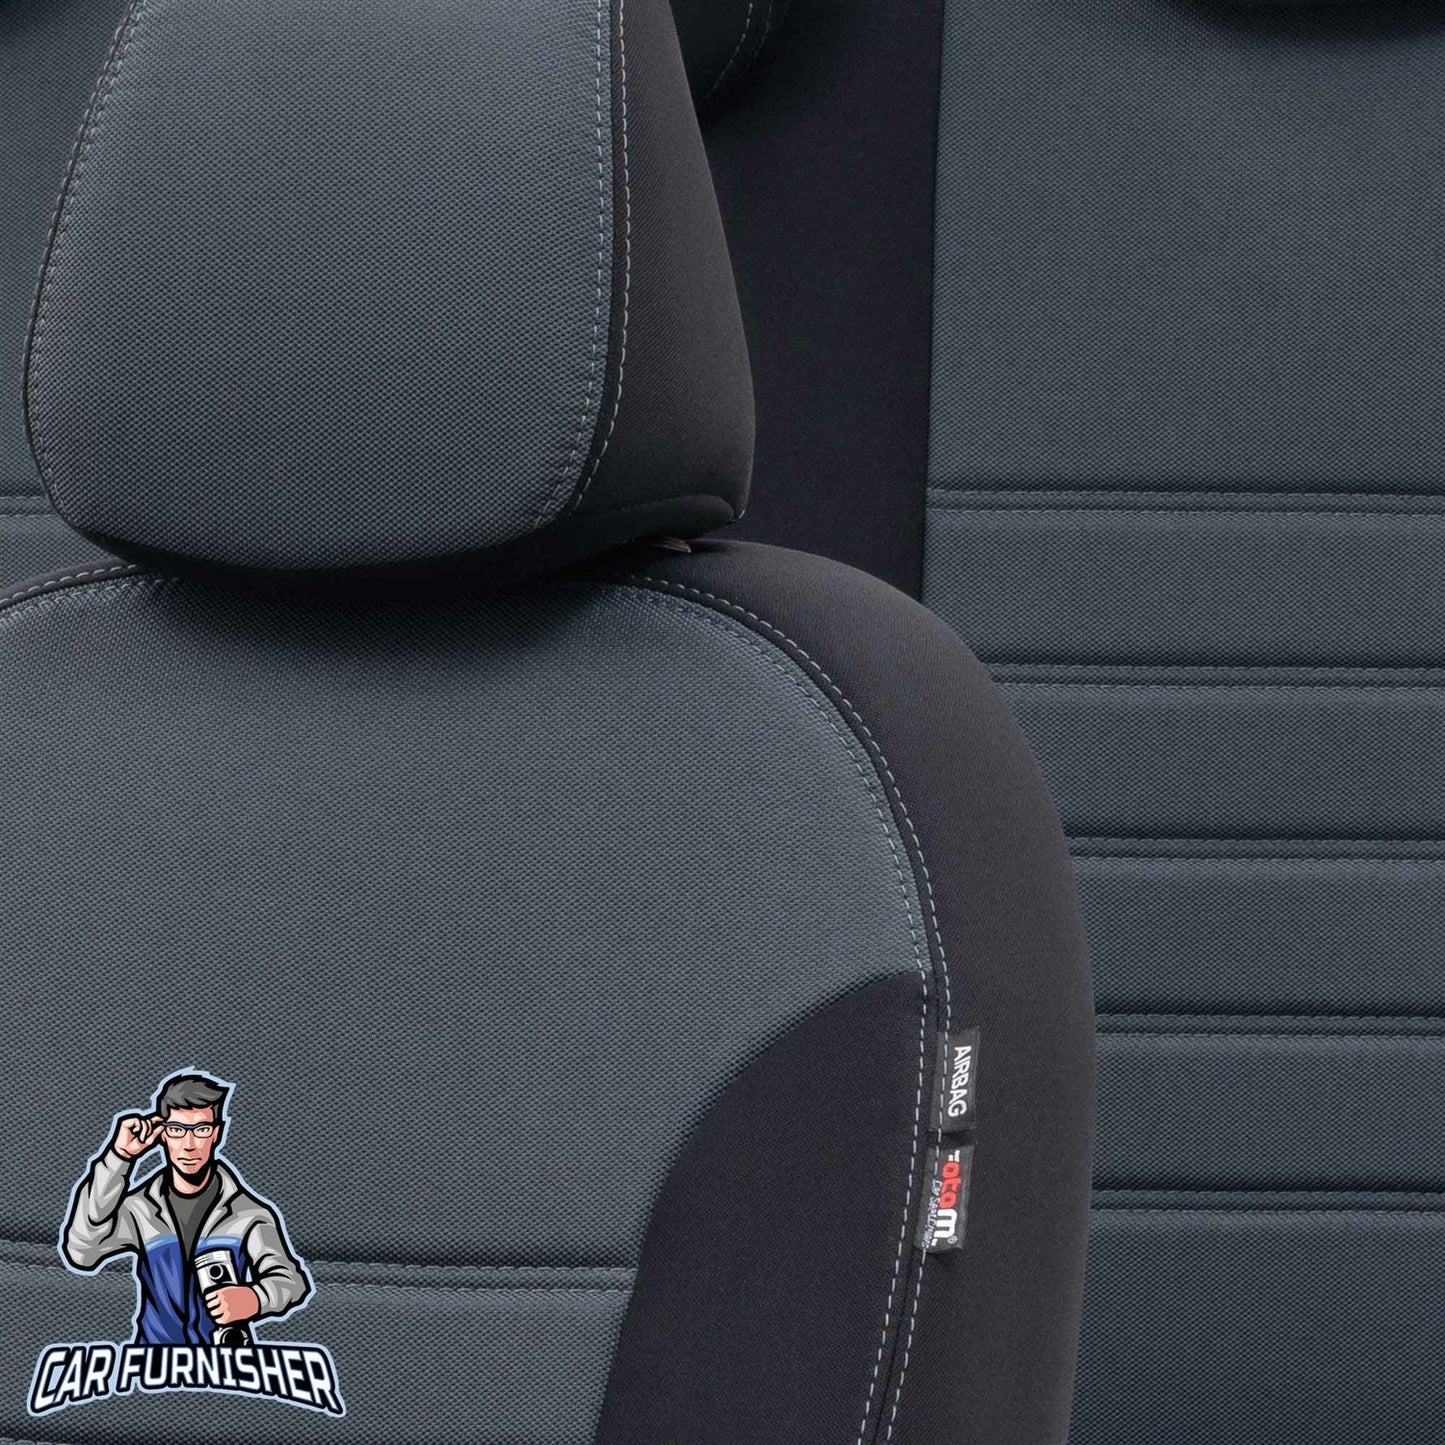 Volkswagen Tiguan Seat Cover Original Jacquard Design Smoked Black Jacquard Fabric